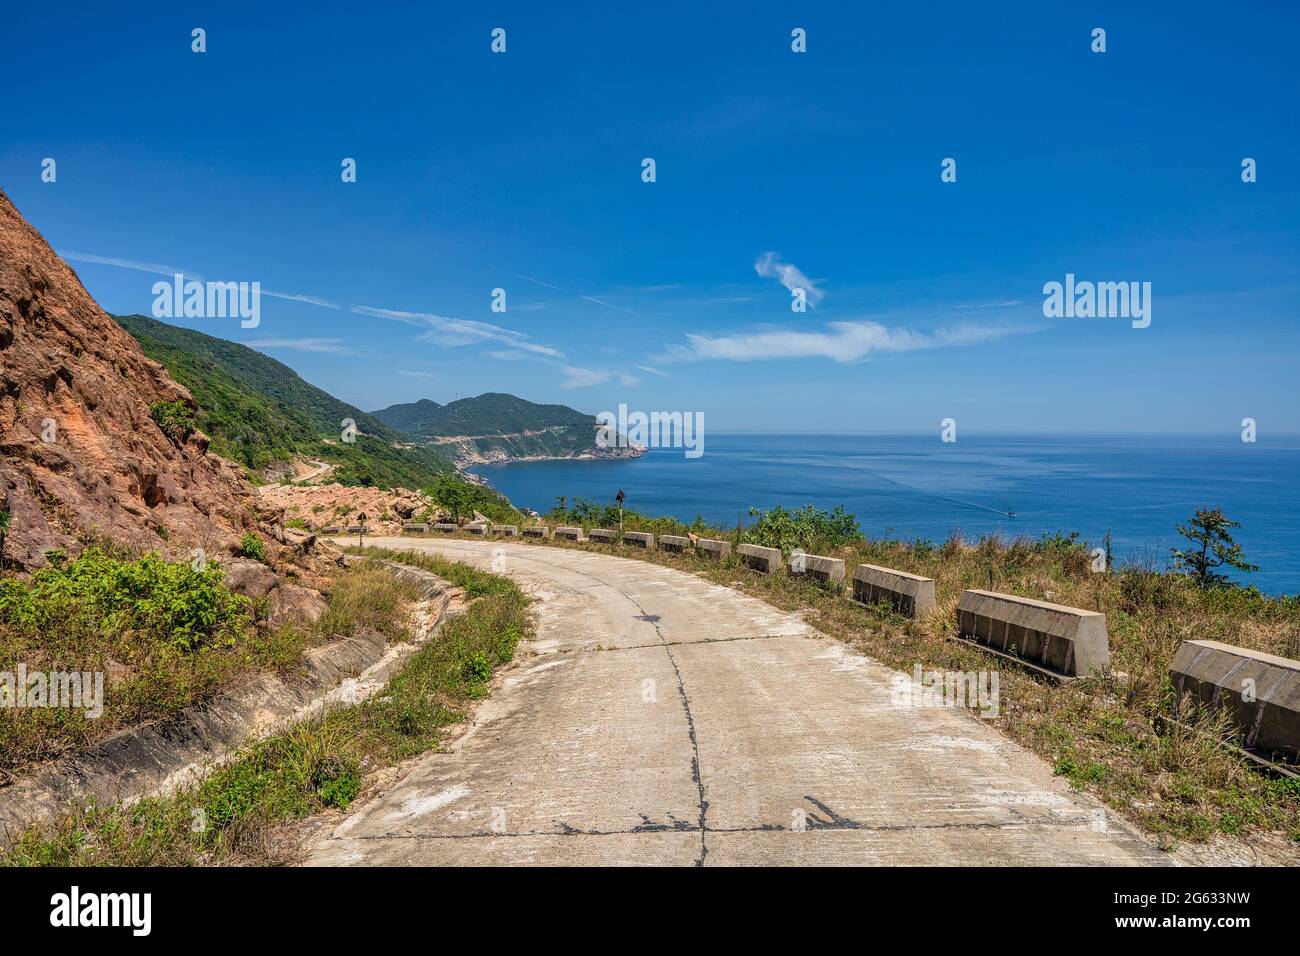 The road around the Cu Lao Cham island near Da Nang and Hoi An, Vietnam Stock Photo